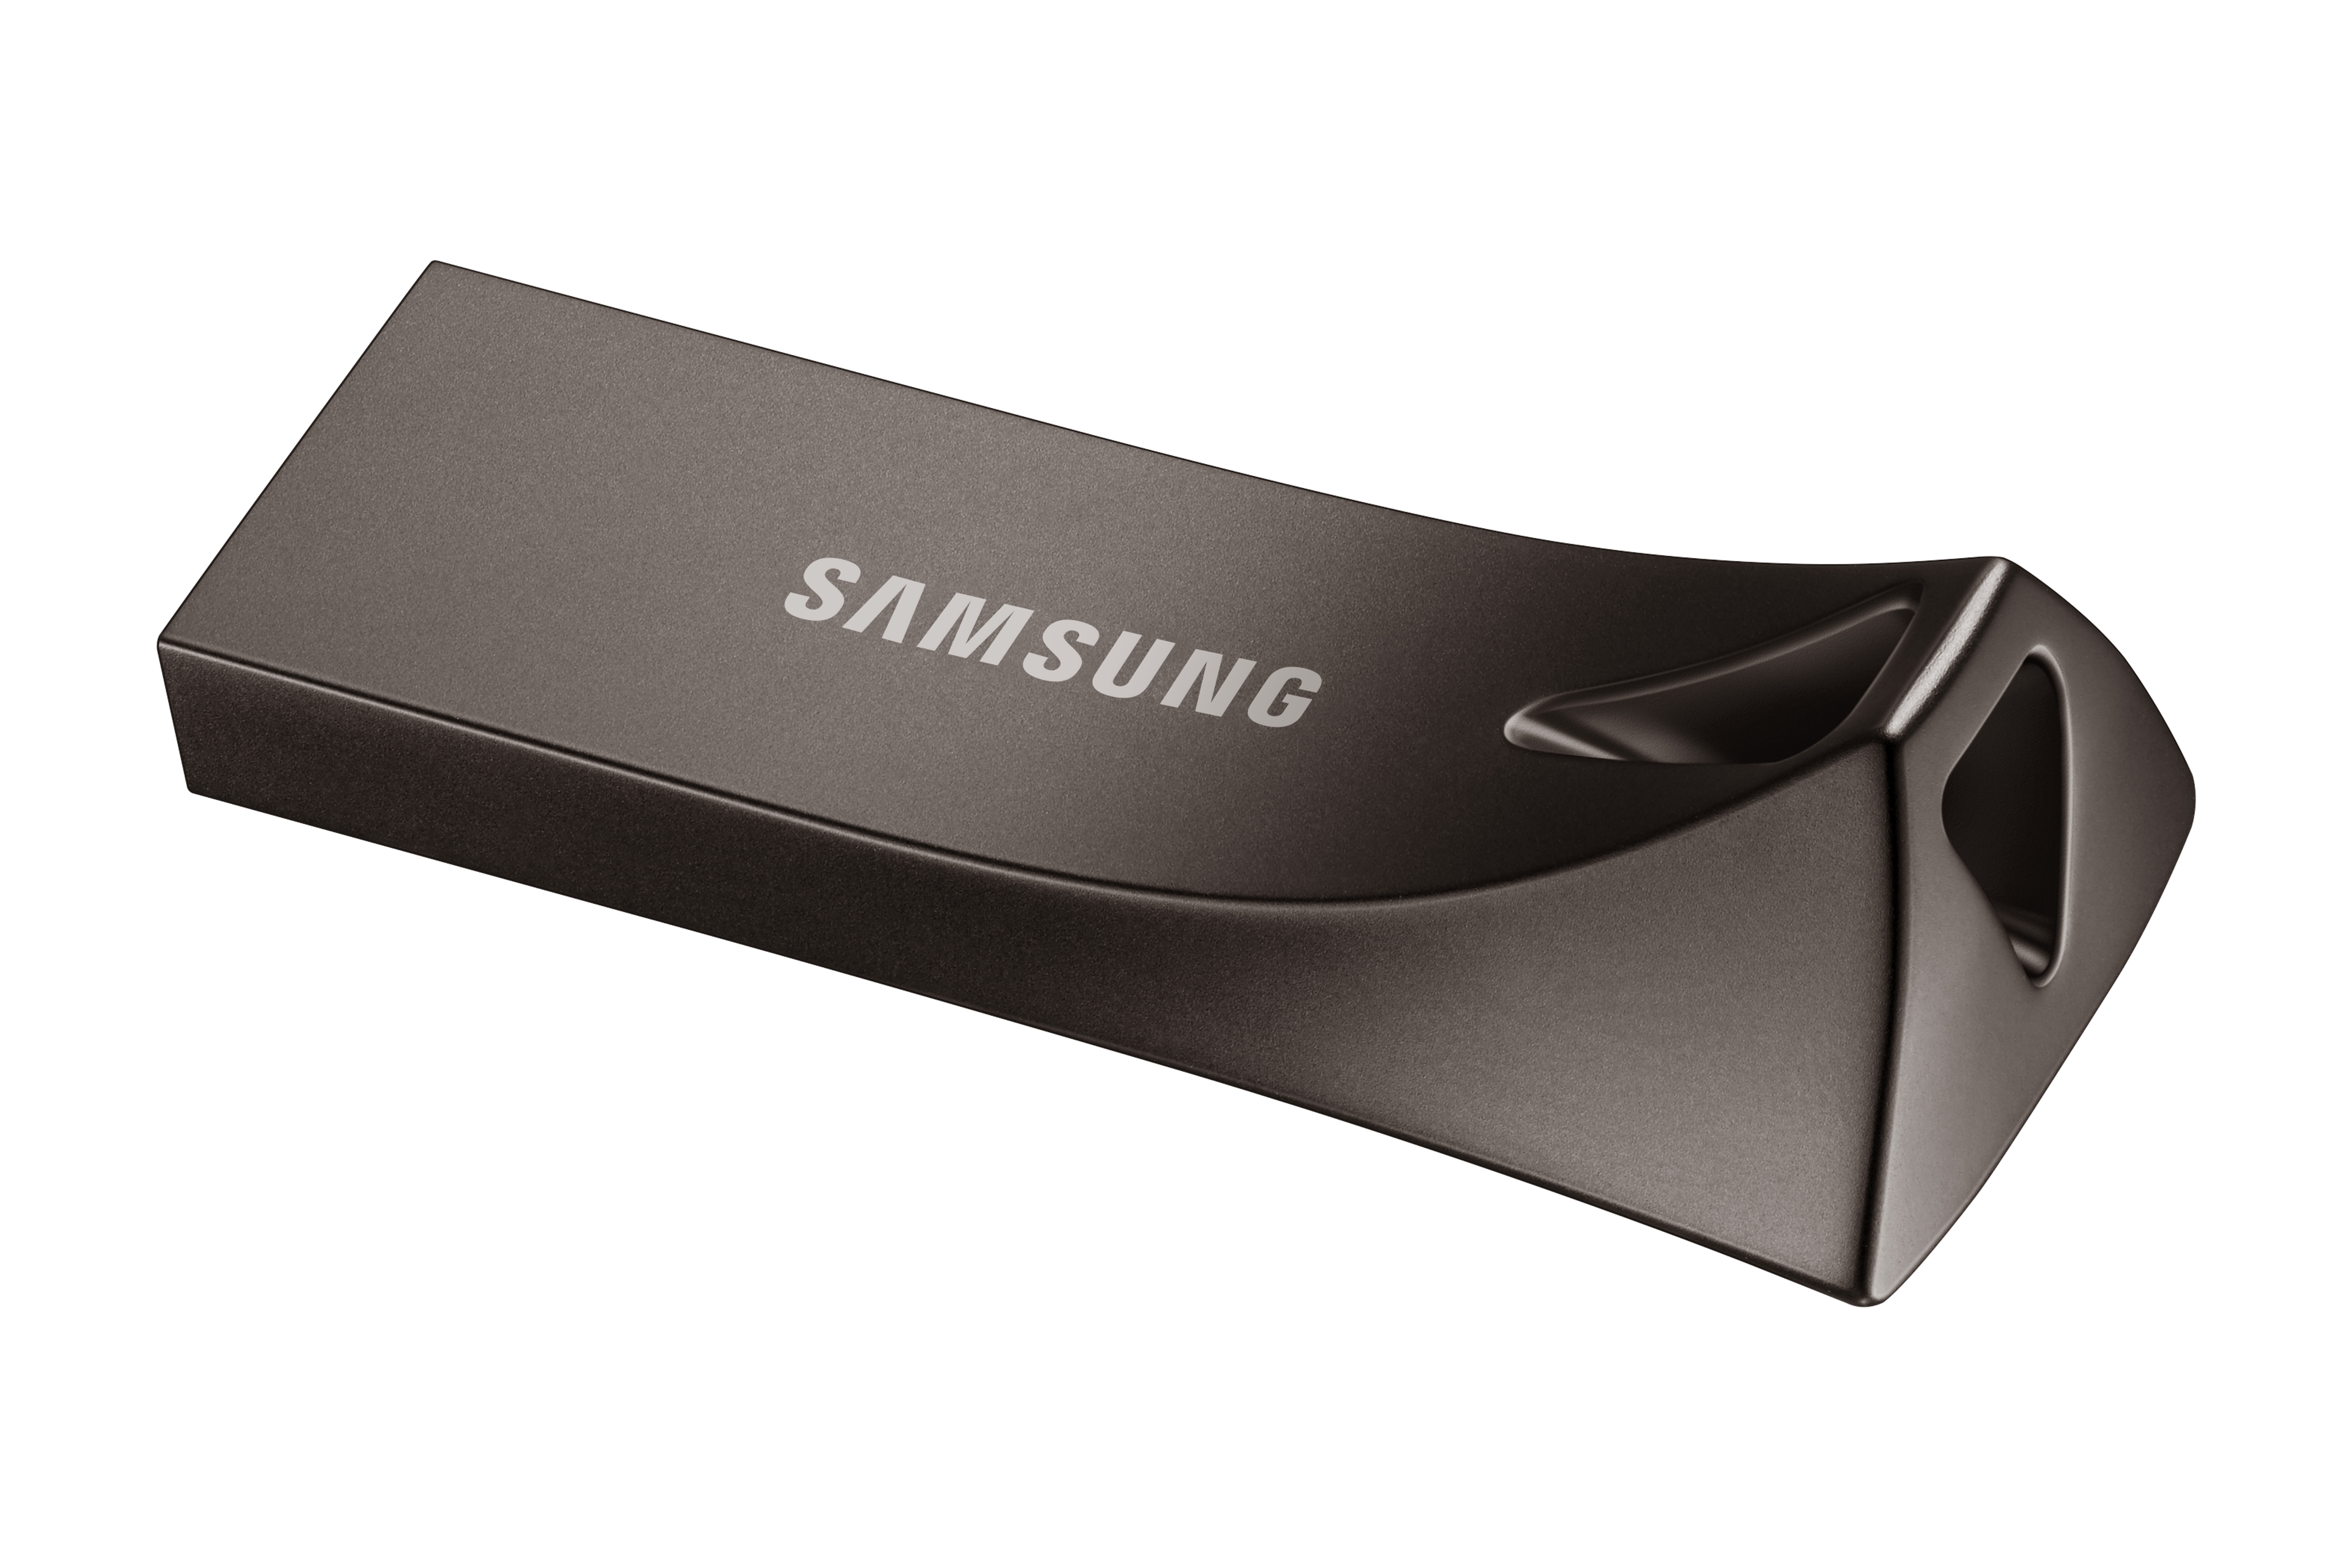 Thumbnail image of BAR Plus USB 3.1 Flash Drive 256GB Titan Grey